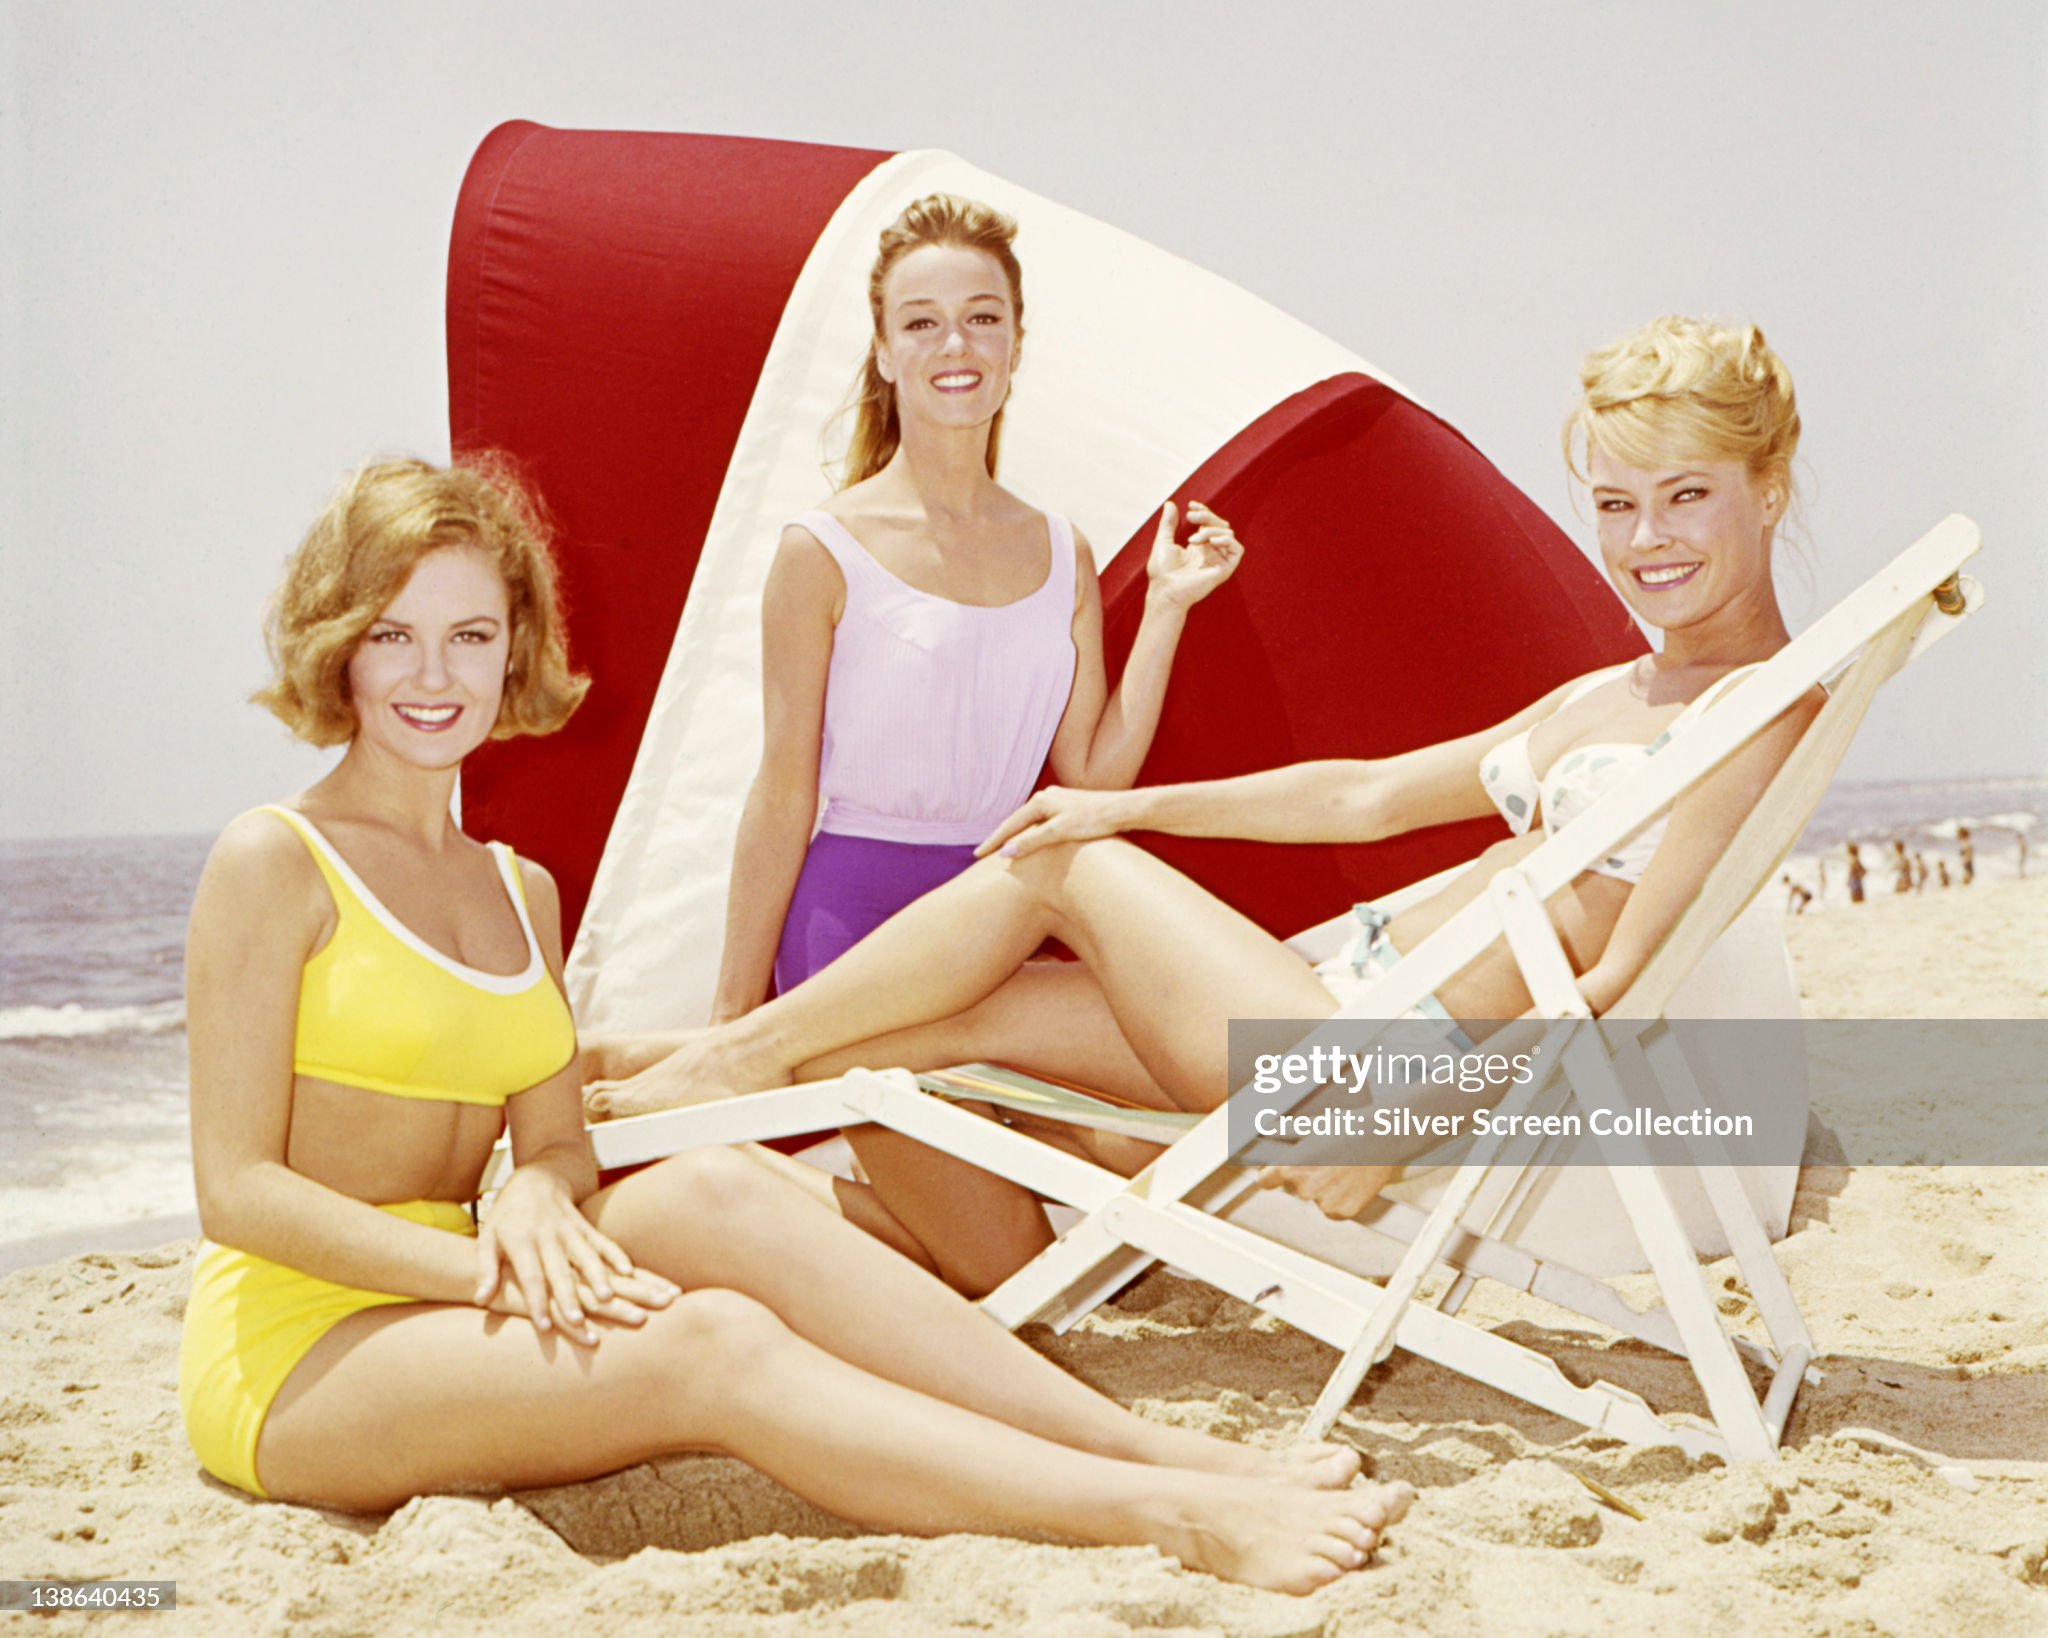 Shelley Fabares, US actress and singer, wearing a yellow bikini alongside two women in beachwear, posing on a beach, circa 1965. 